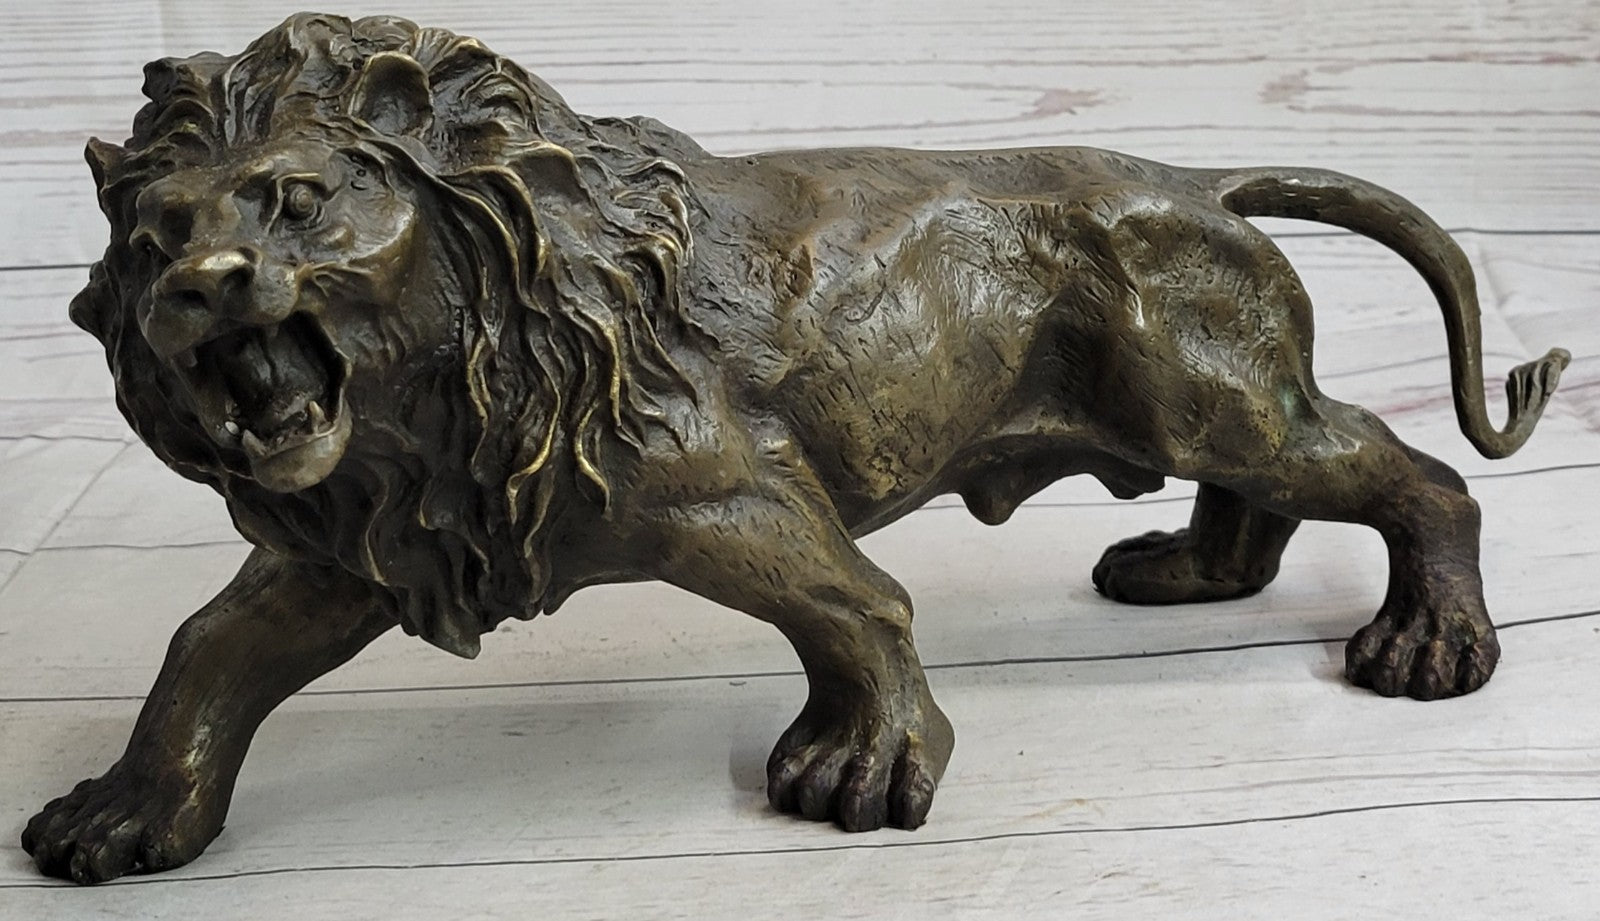 Handcrafted bronze sculpture SALE Deco Art Lion African Wildlife Cast Hot